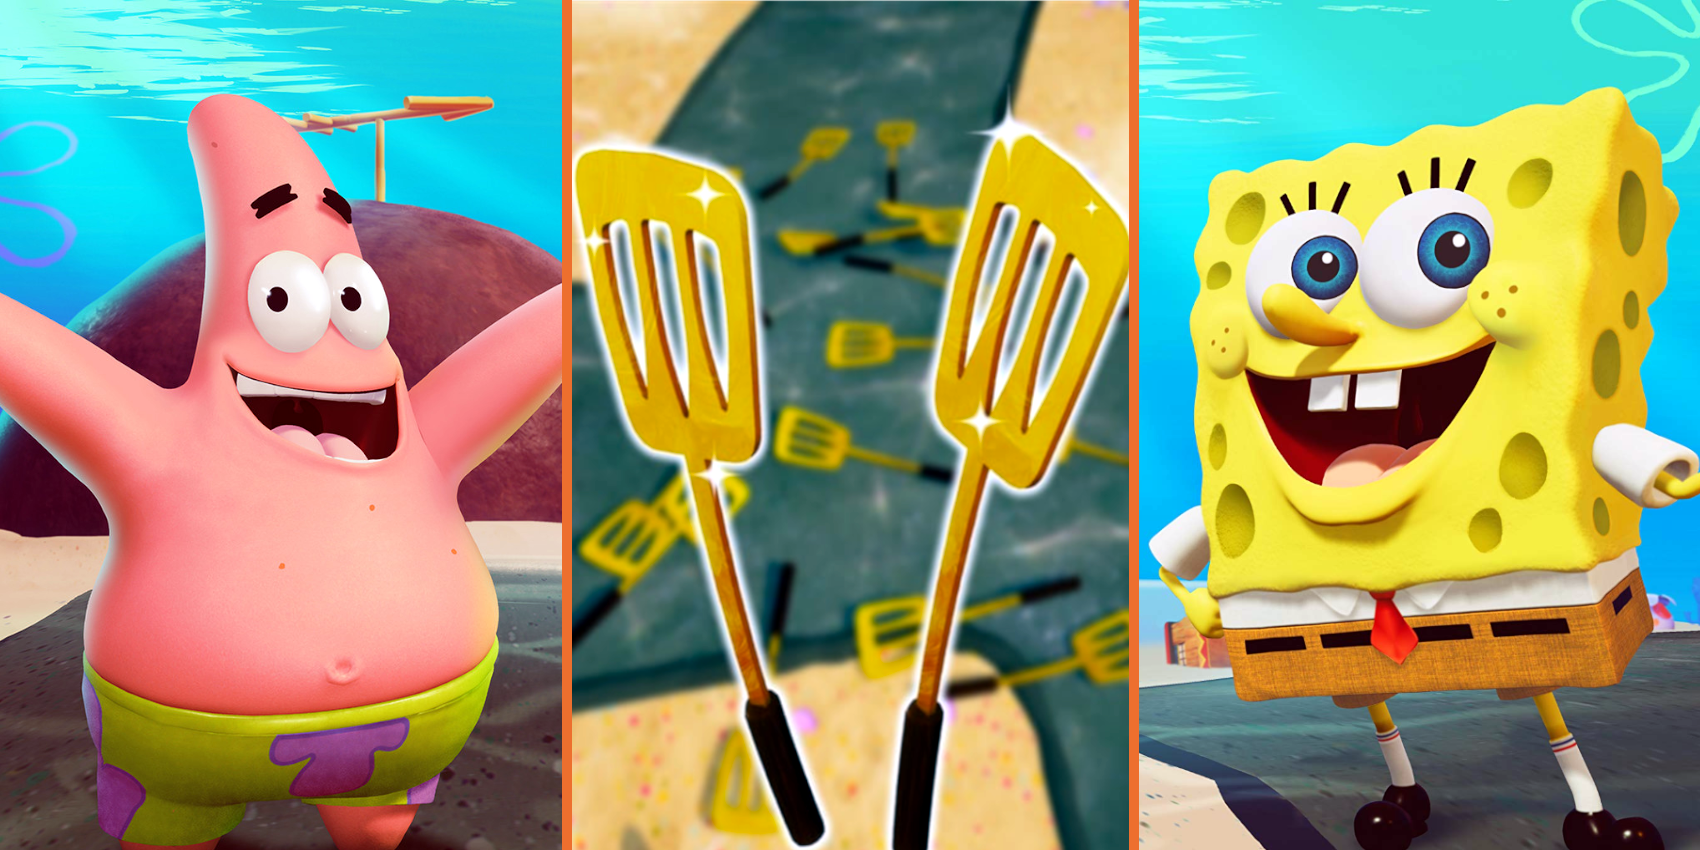 SpongeBob SquarePants: Battle for Bikini Bottom – Rehydrated will